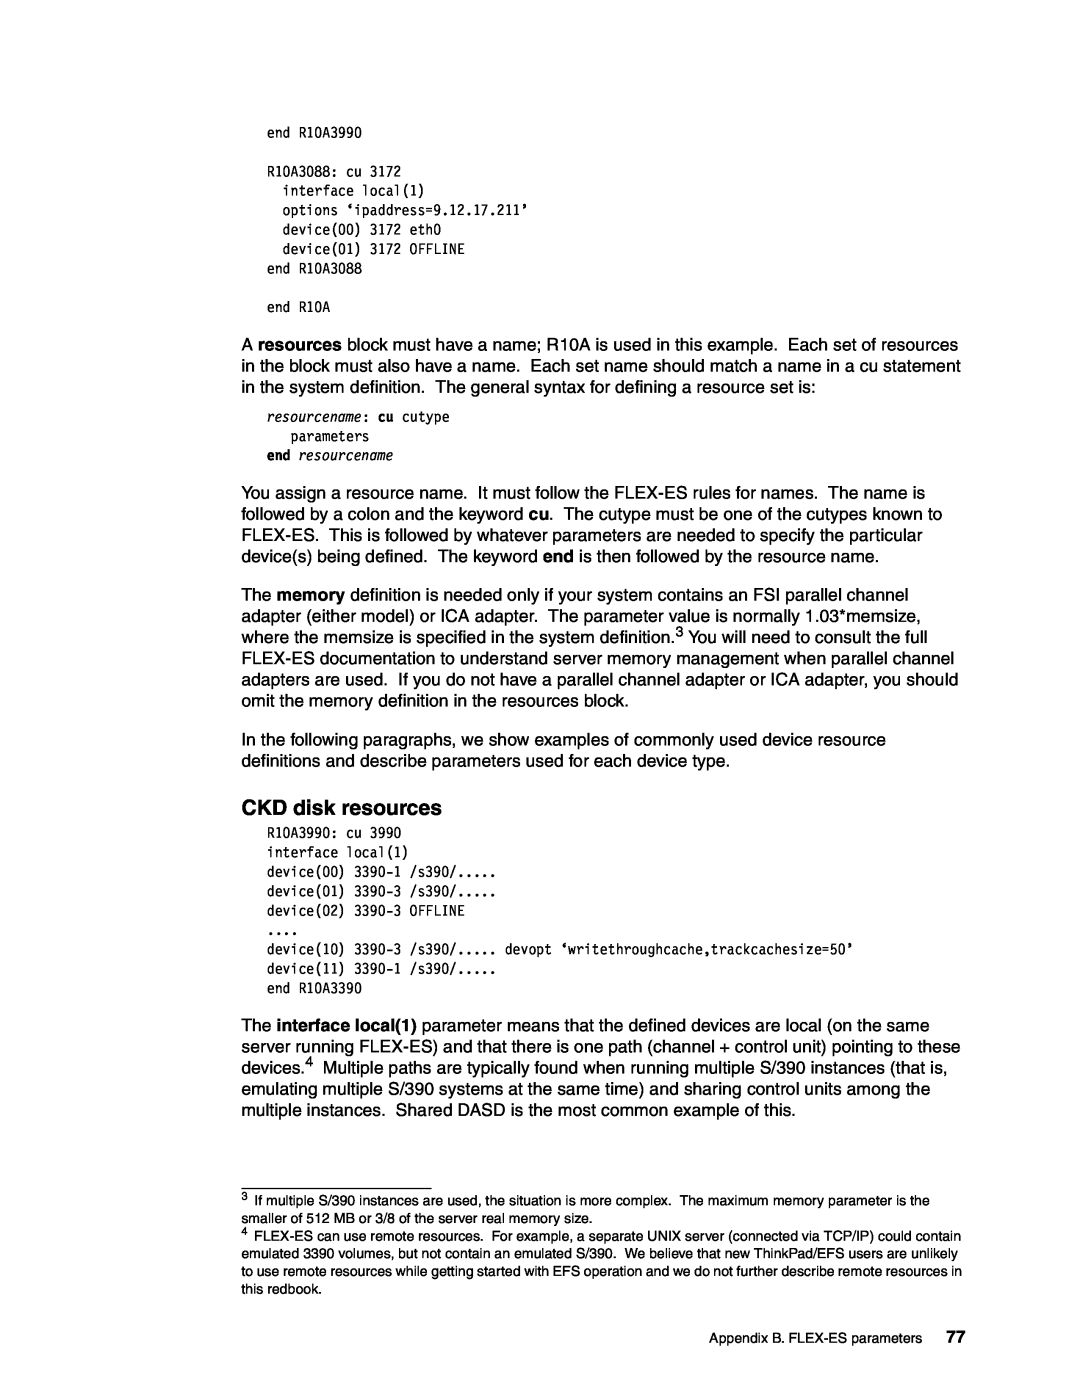 IBM s/390 manual CKD disk resources, resourcename cu cutype parameters end resourcename 